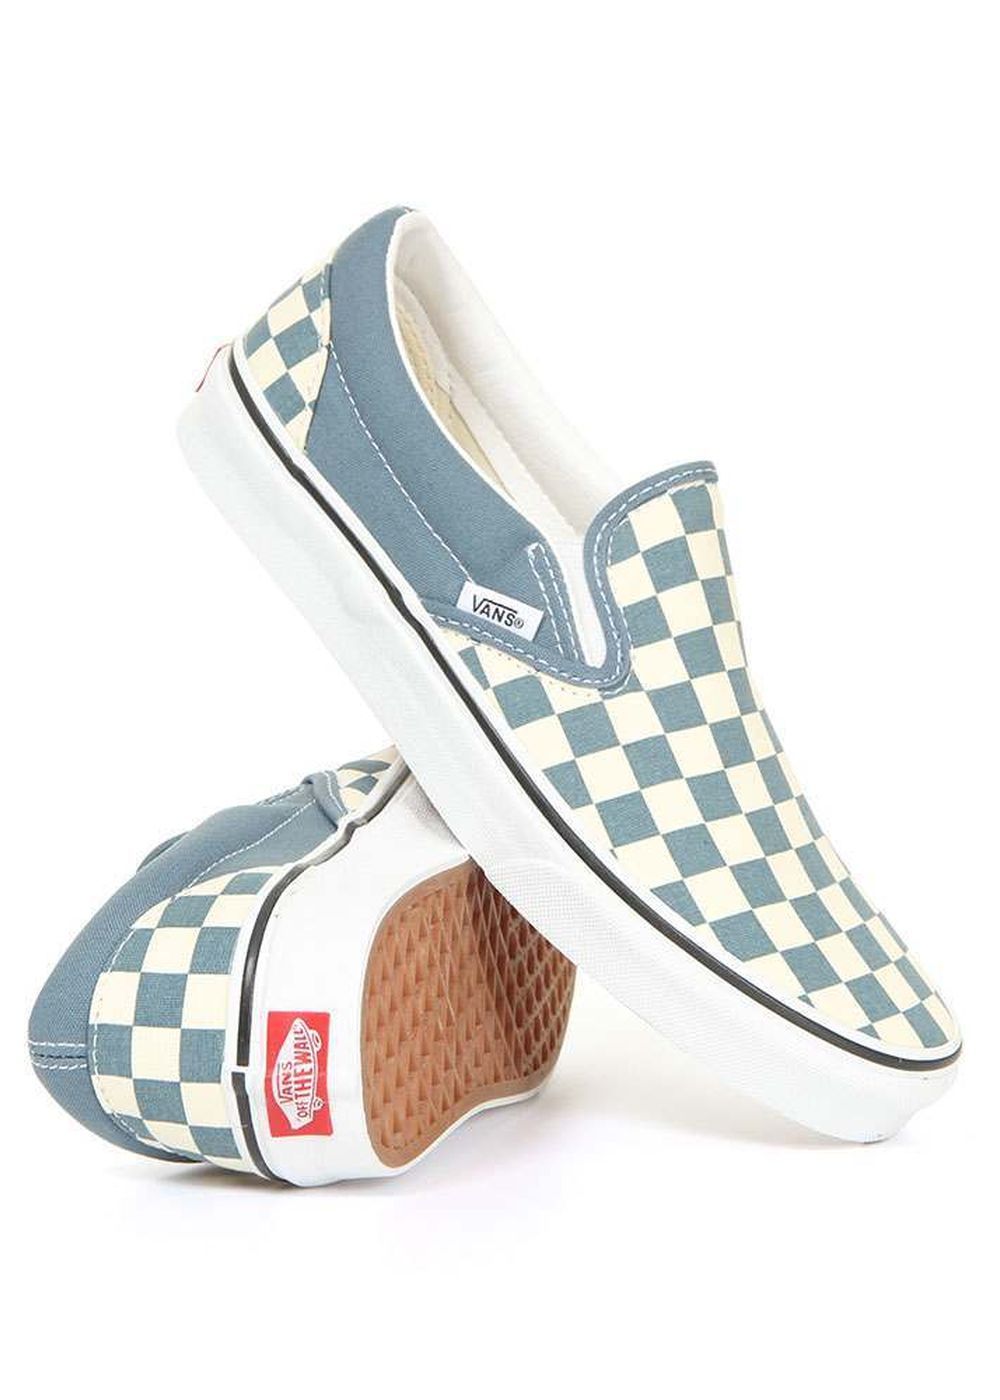 Vans Classic Slip-On Shoes Blue/White 